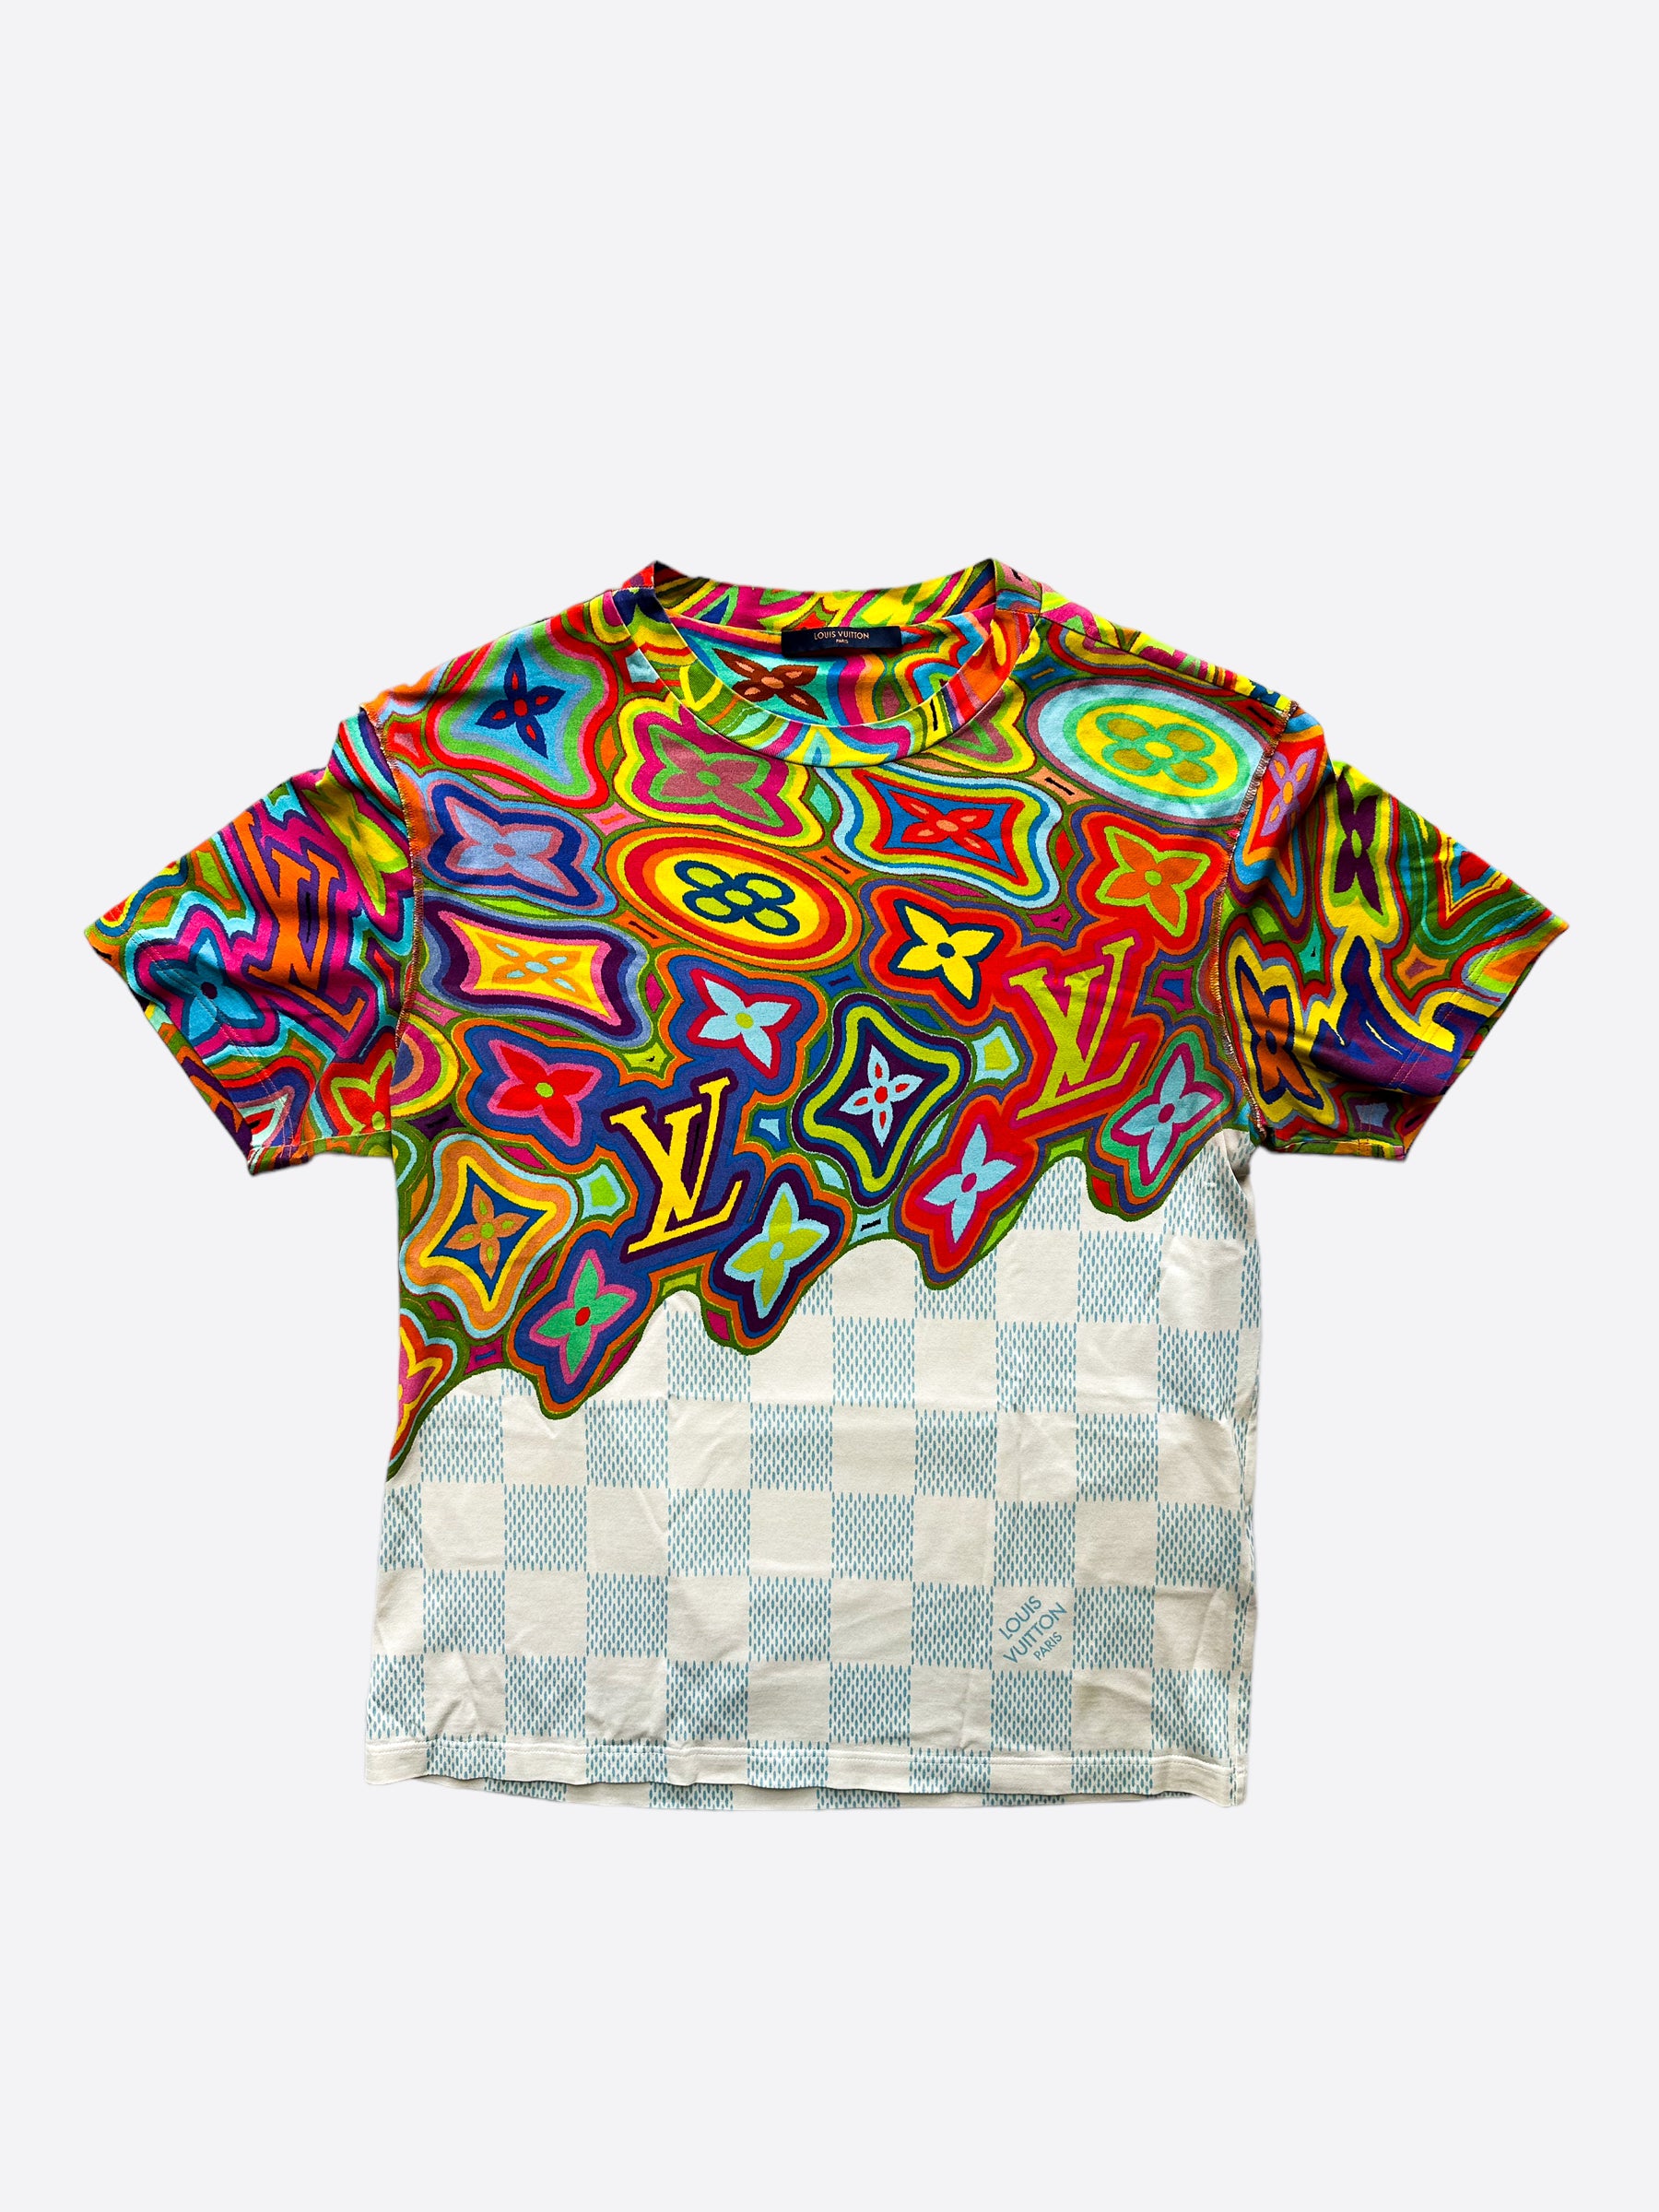 Multicolor LV T-Shirt